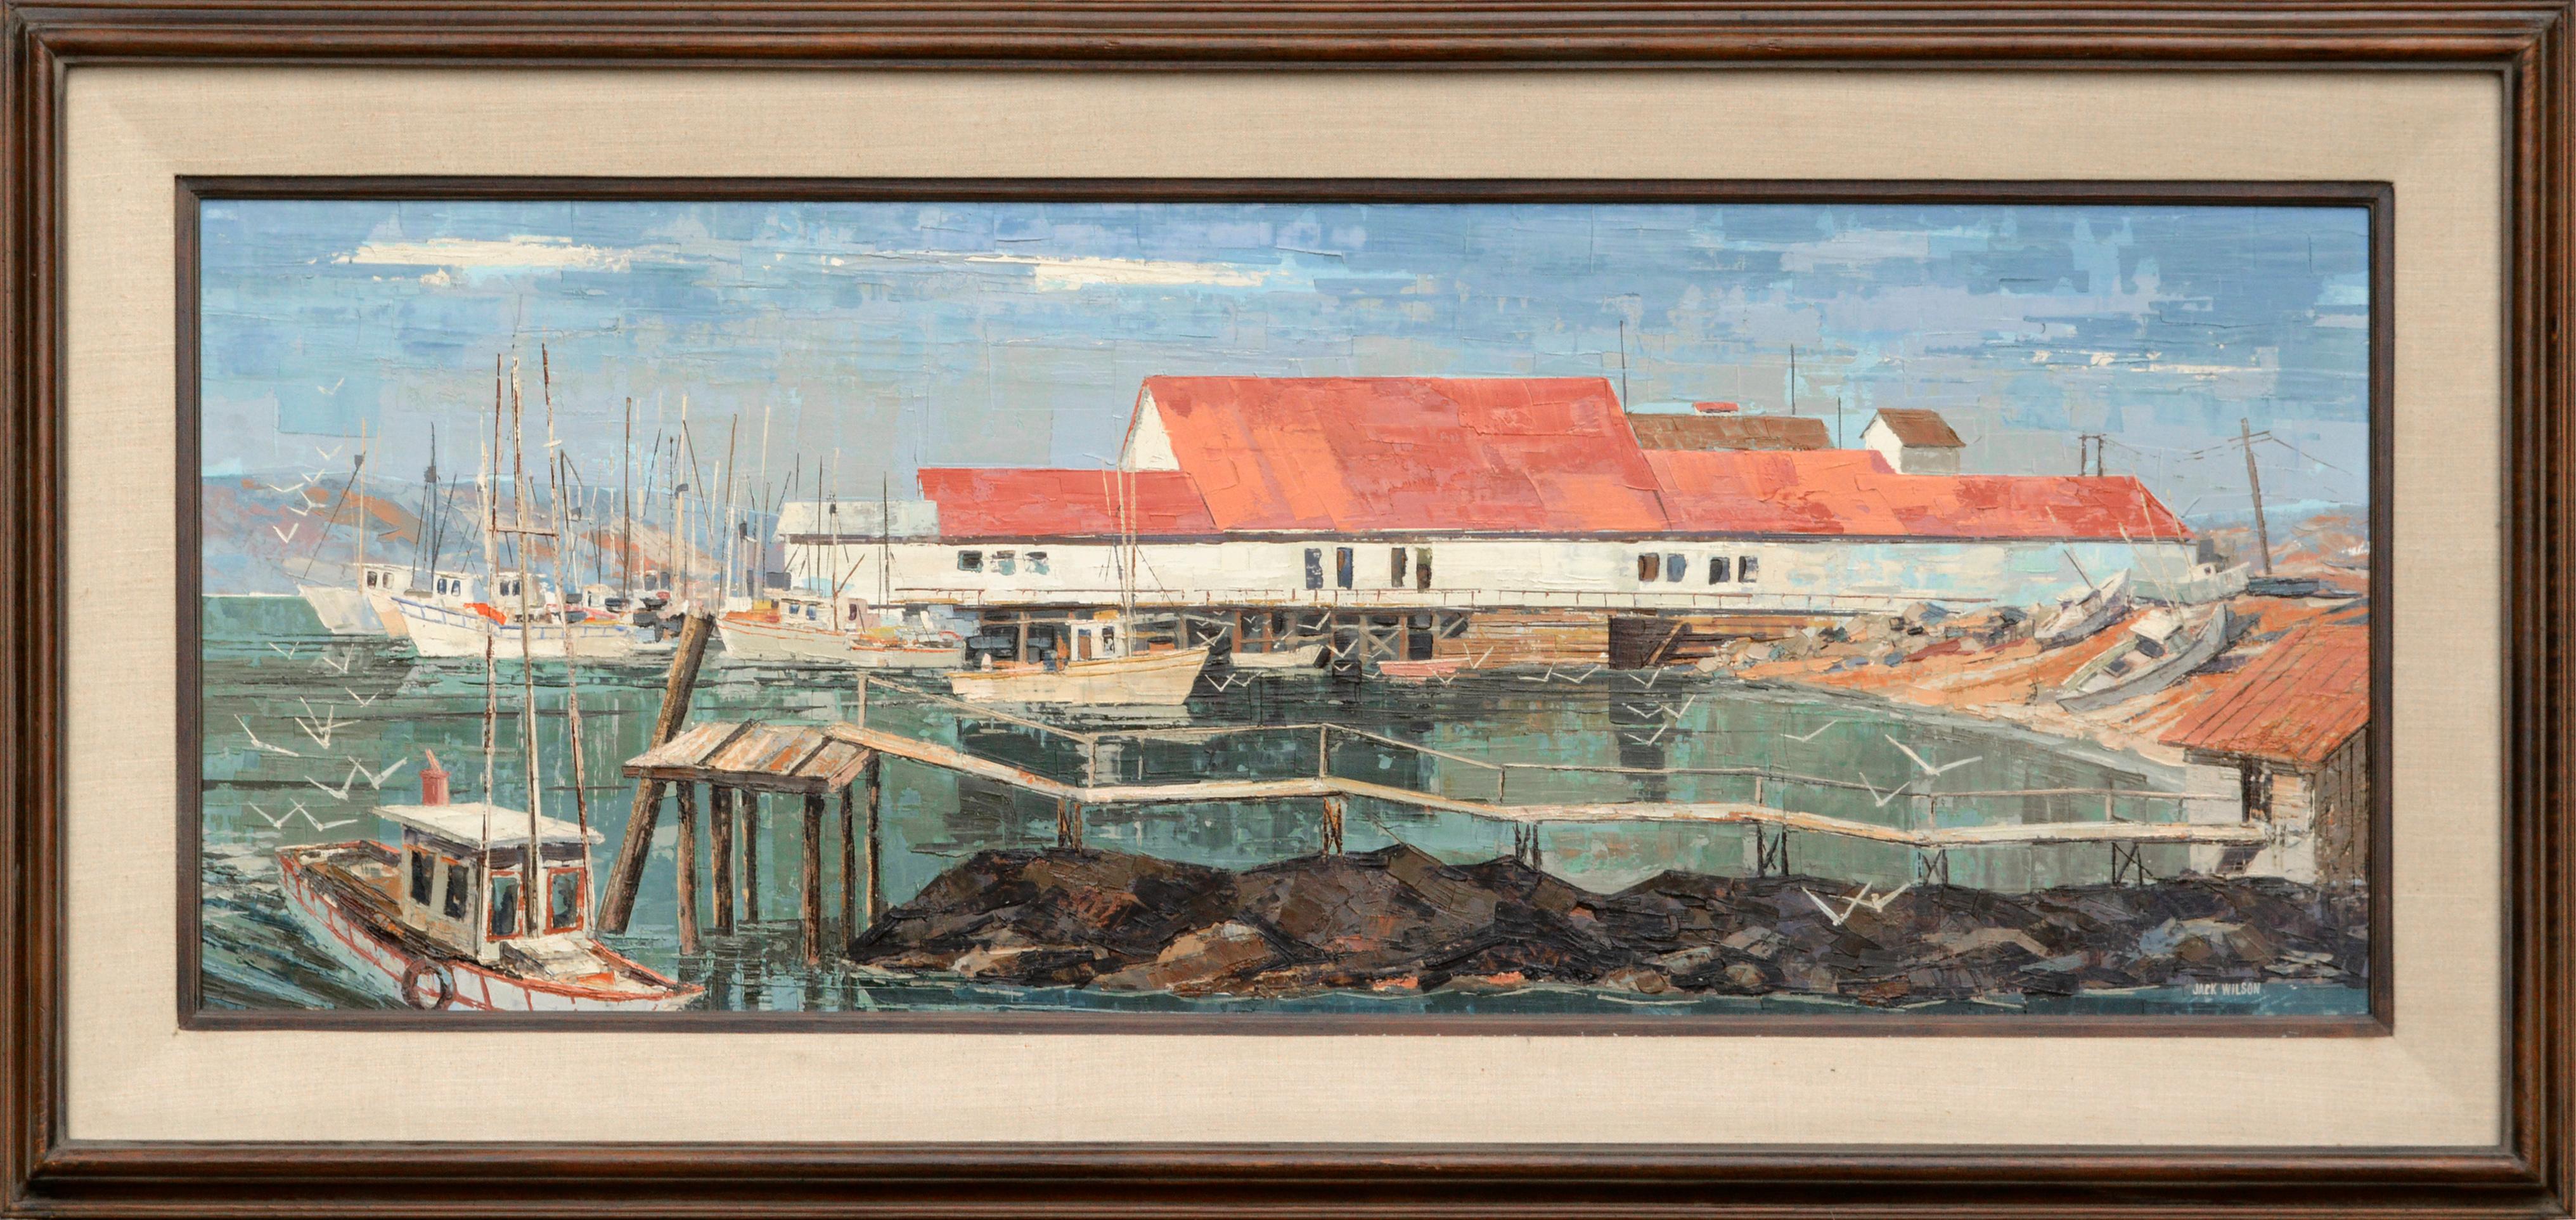 Jack Wilson Landscape Painting - "Bodega Bay Wharf" Seascape